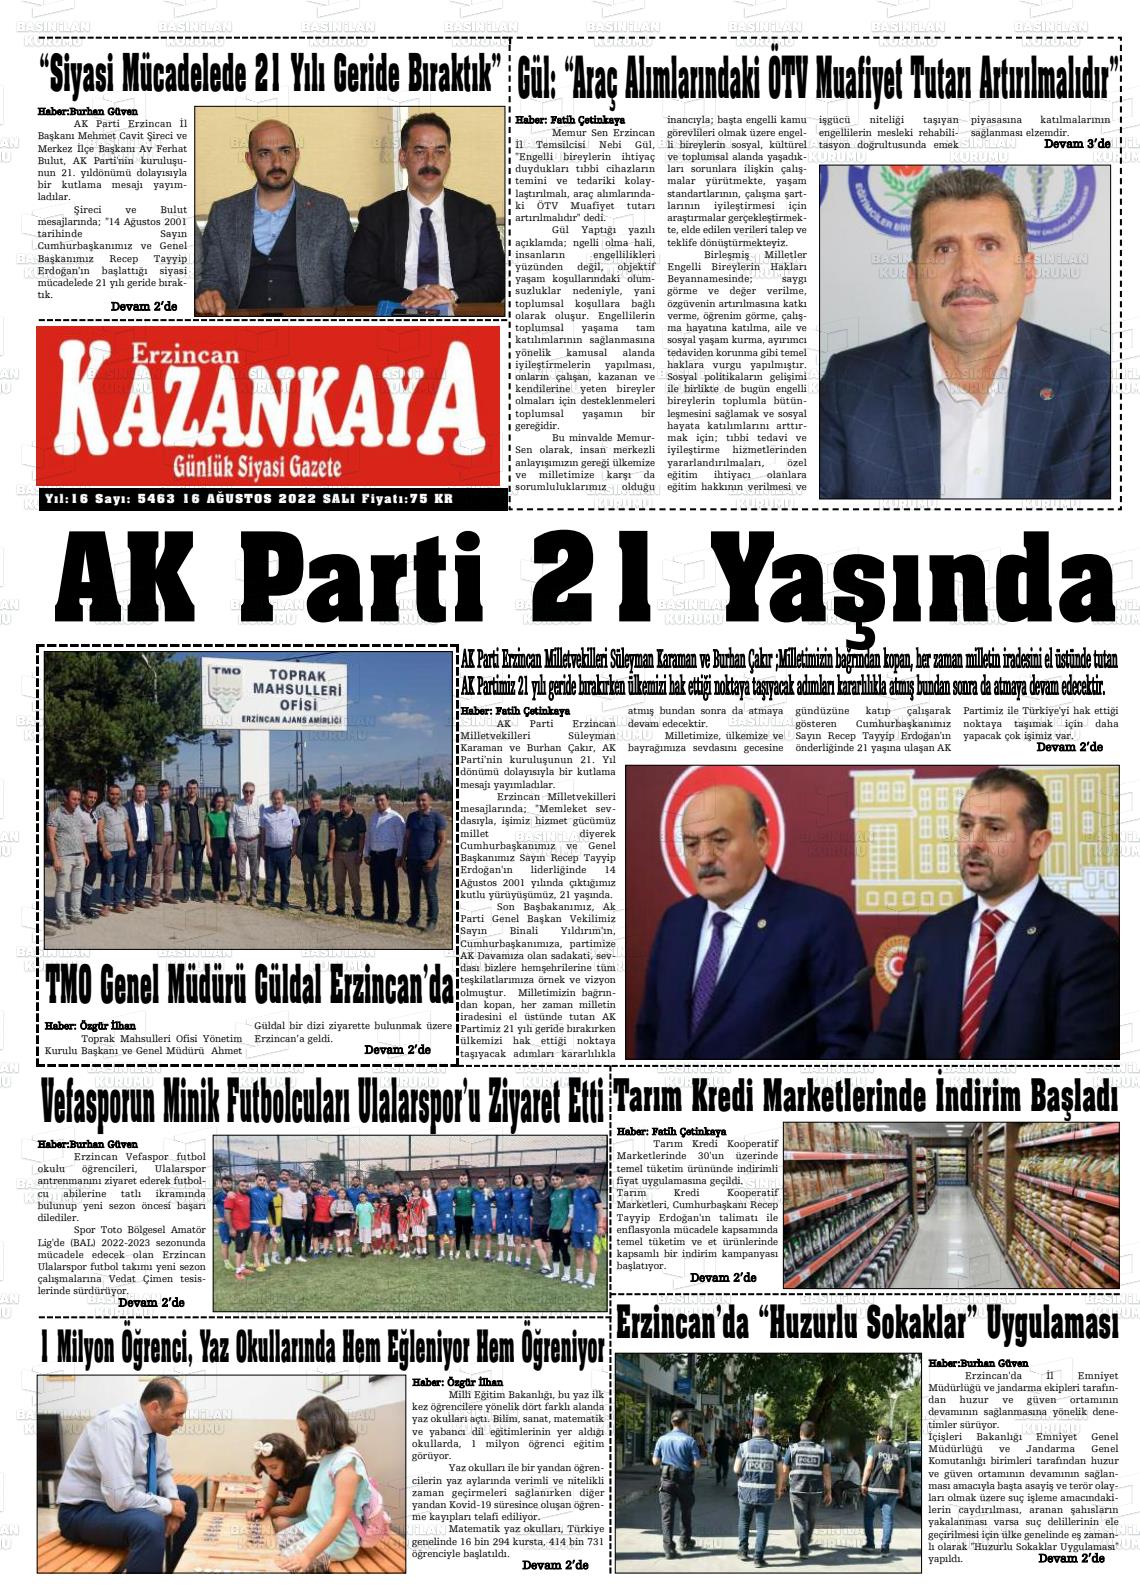 16 Ağustos 2022 Kazankaya Gazete Manşeti